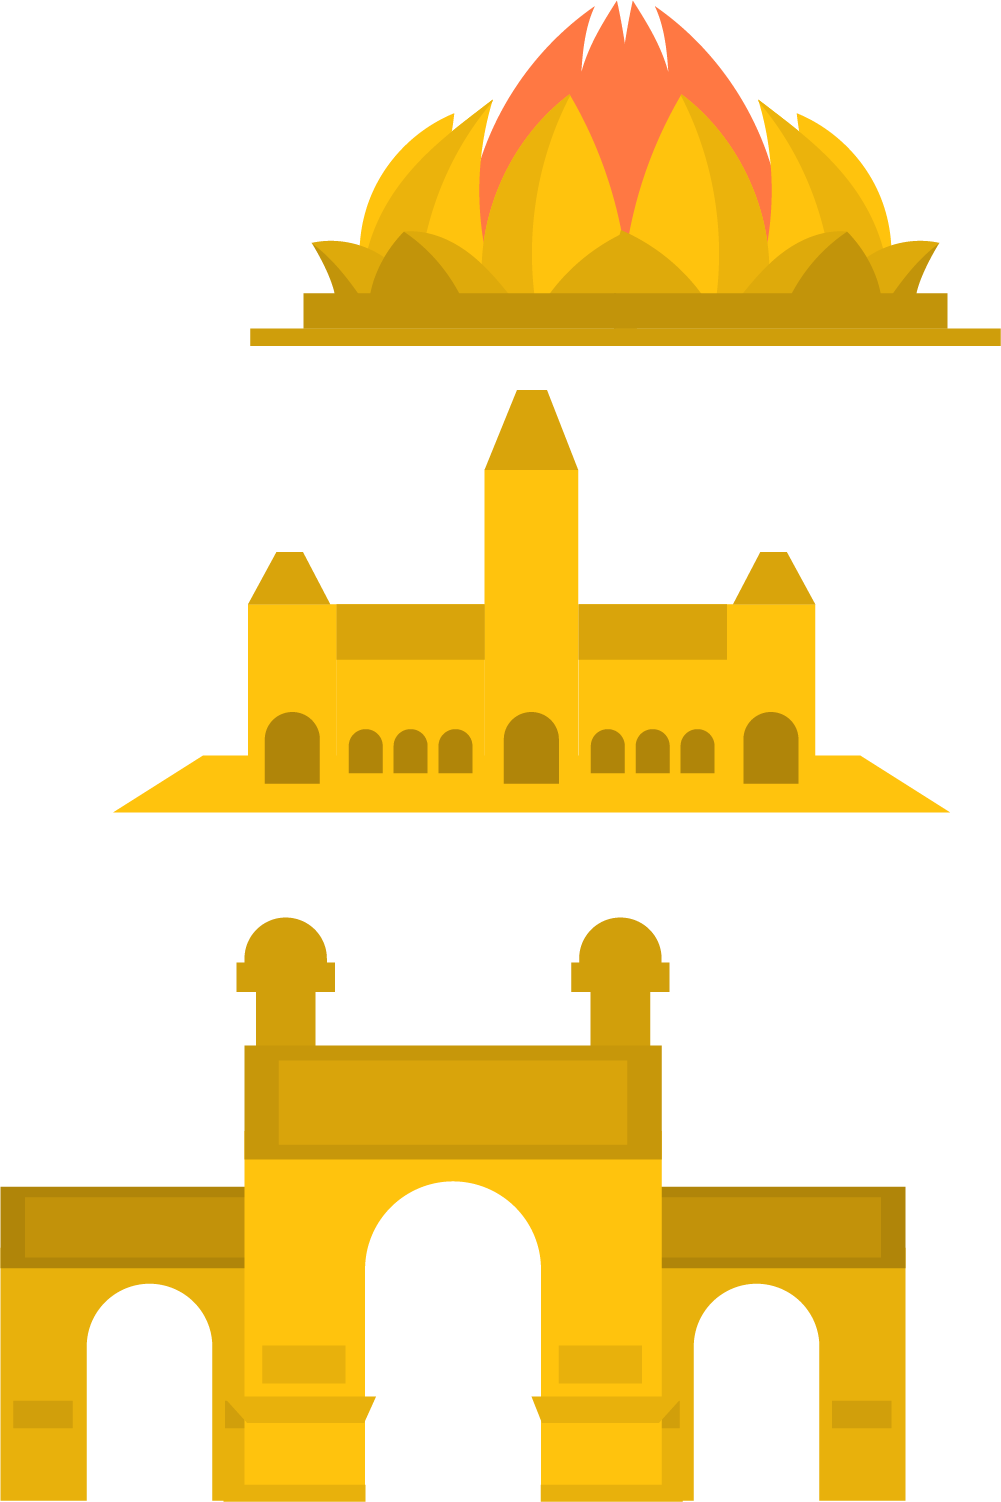 palace clipart golden palace